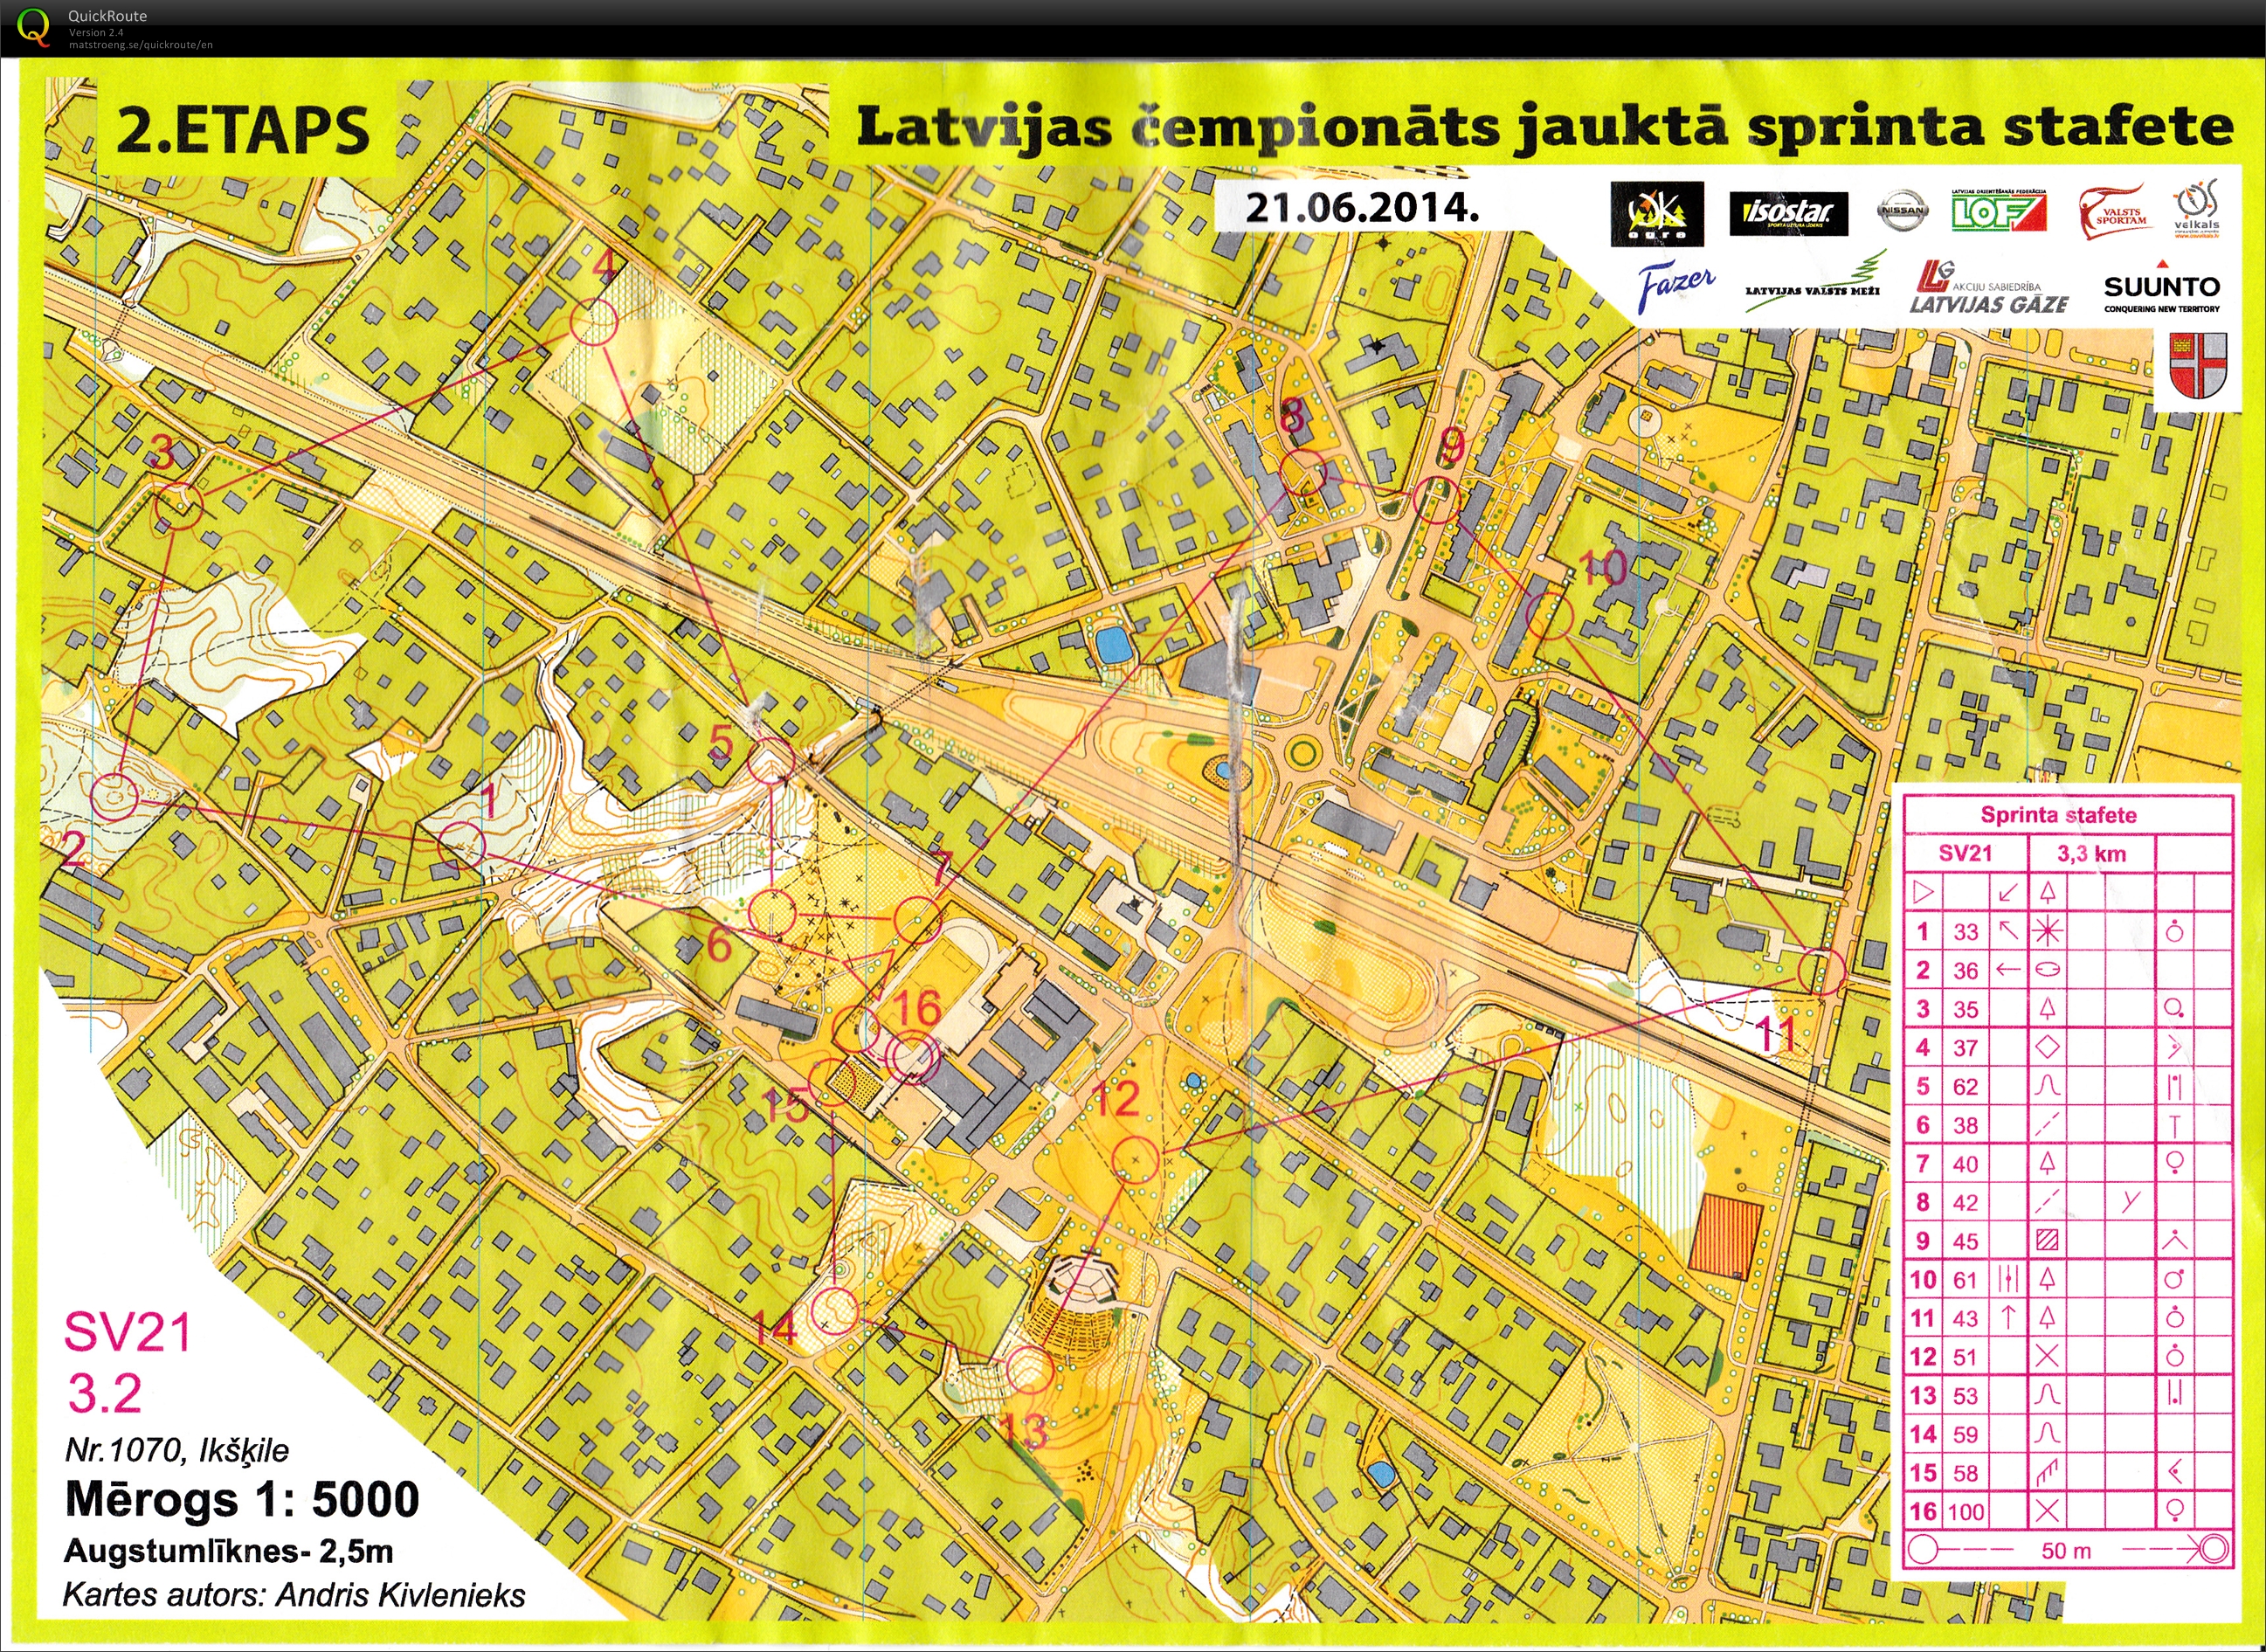 Latvian Mixed Sprint relay championships (2014-06-21)